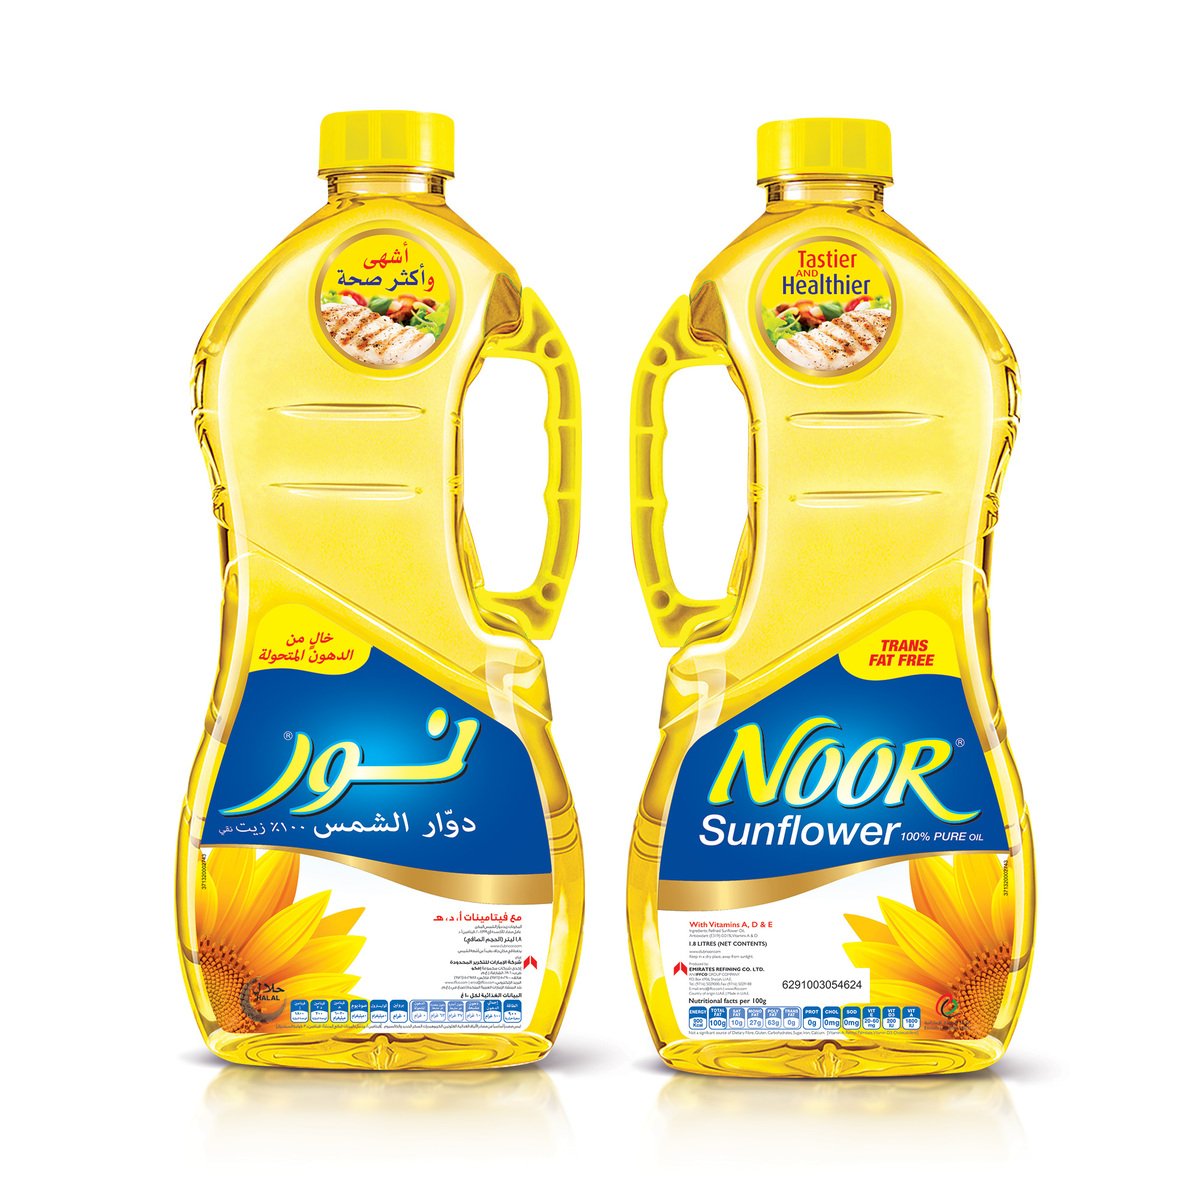 Noor 100% Pure Sunflower Oil Promo 2 x 1.8 Litres